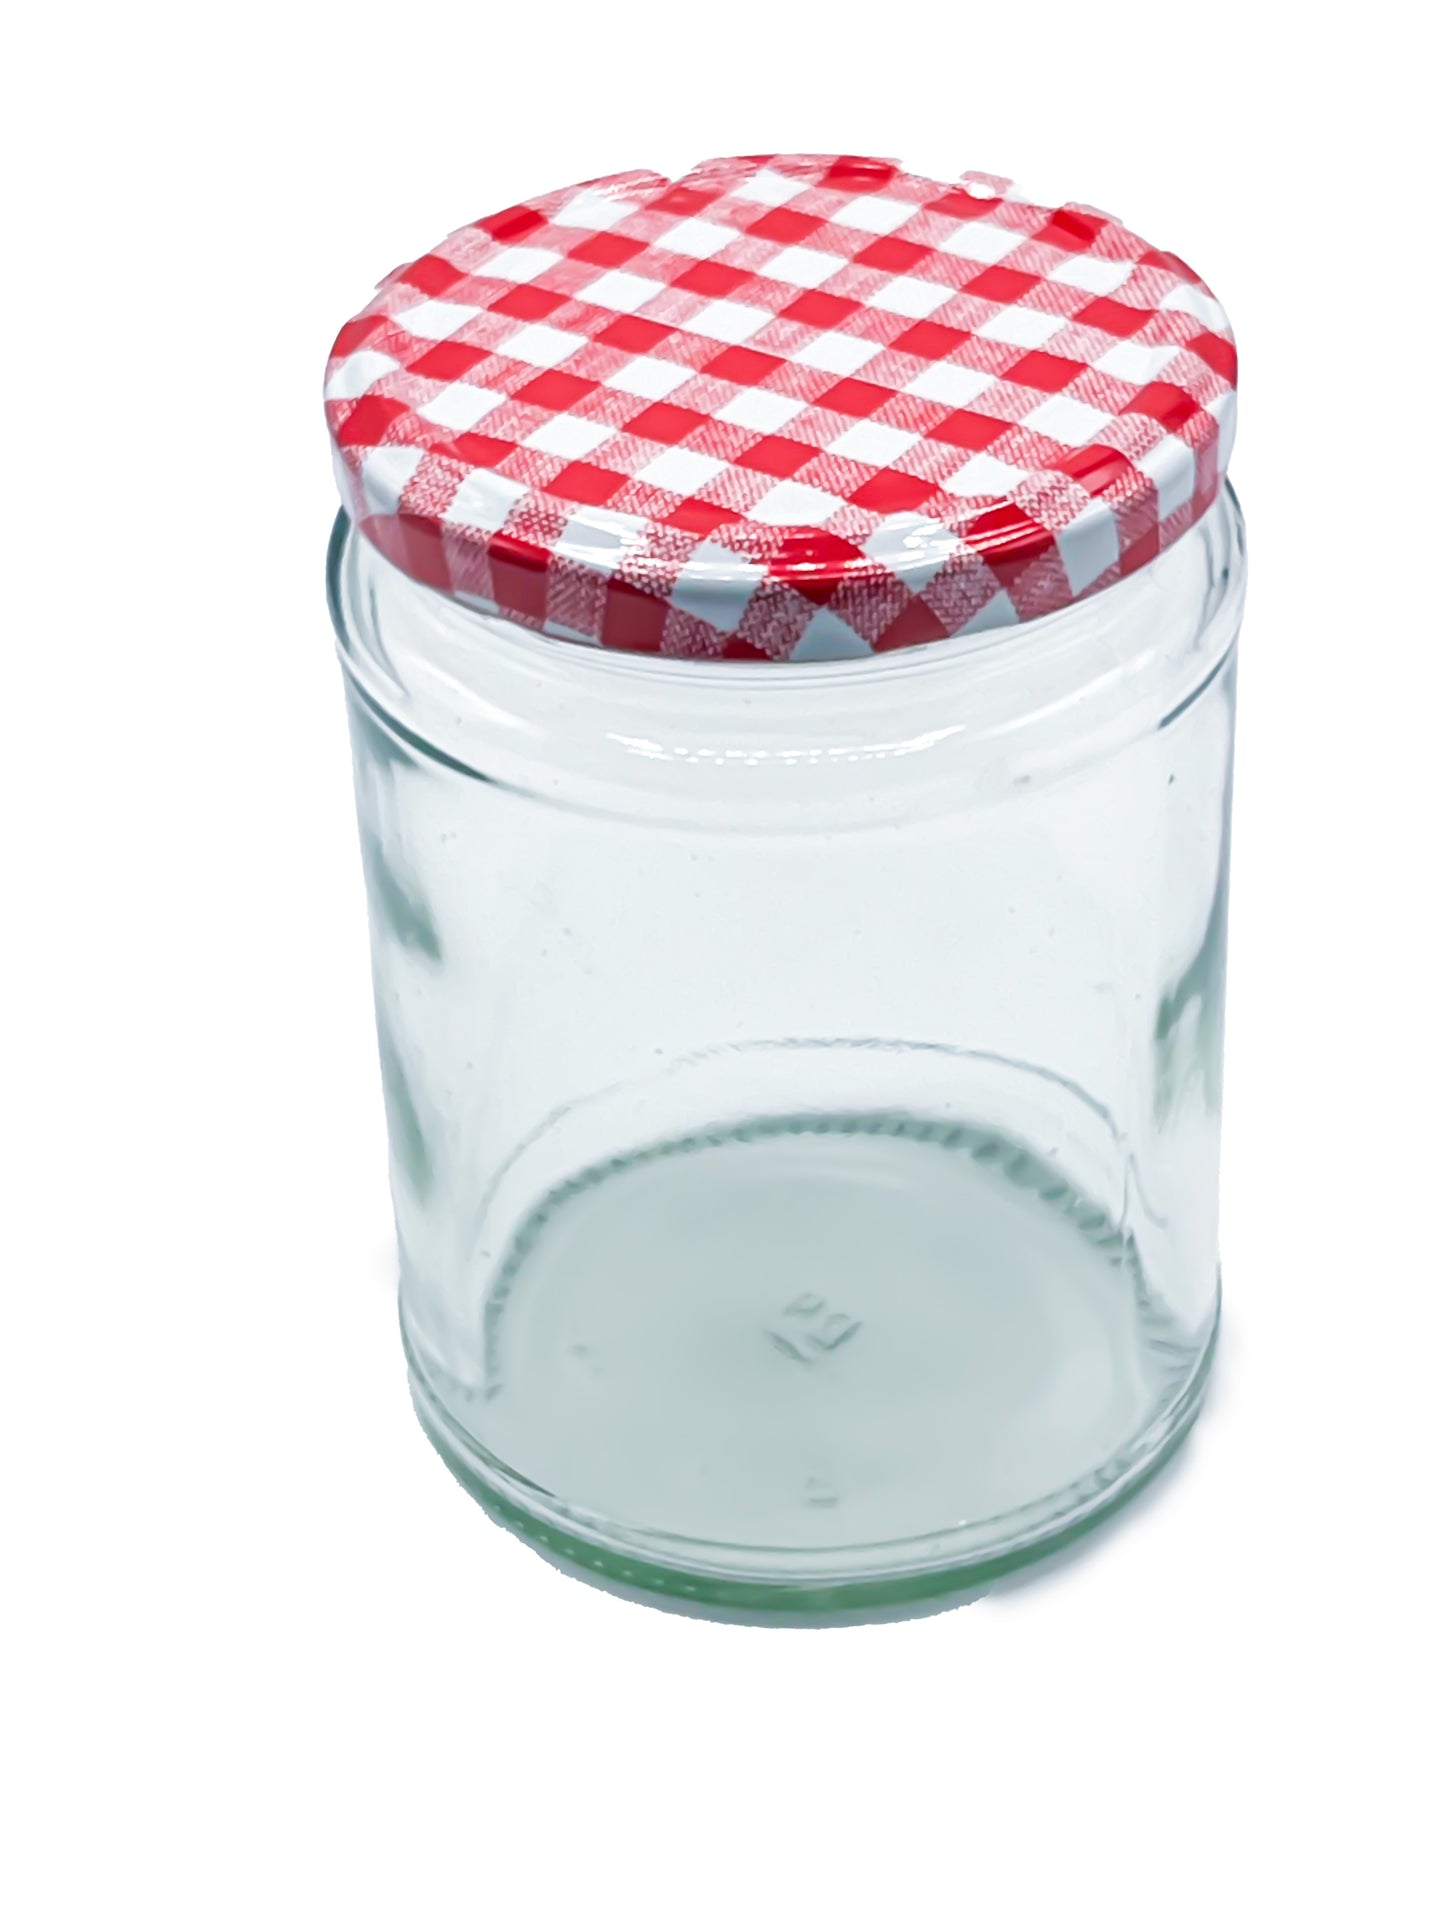 500ml Glass Jars Preserving Food Jars with Twist off Locking Red Gingham Lids - 6 Pack